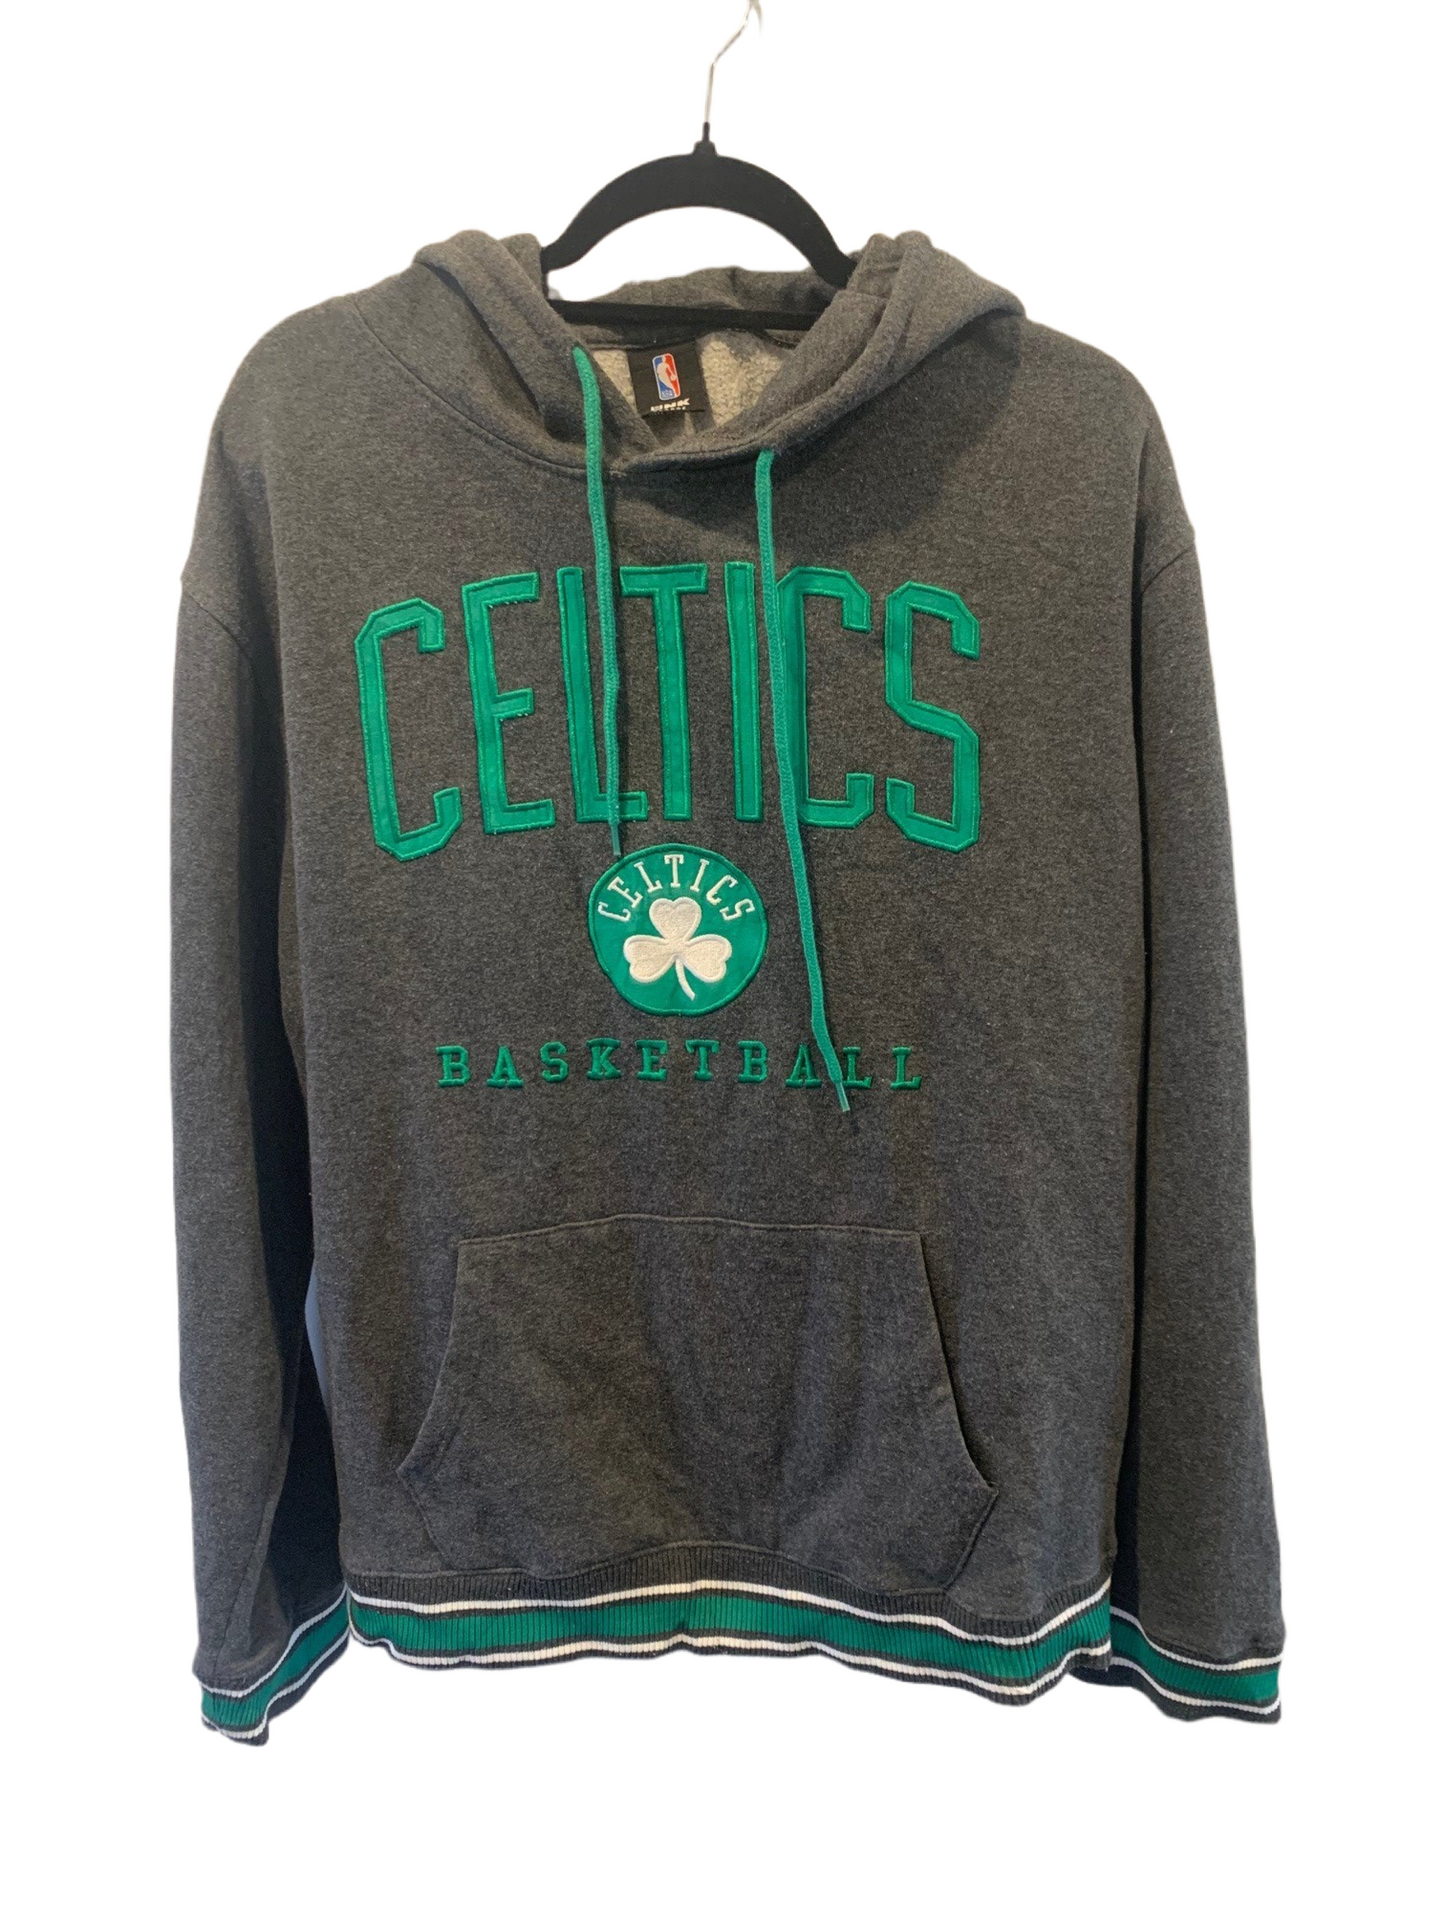 NBA Boston Celtics Hoodie